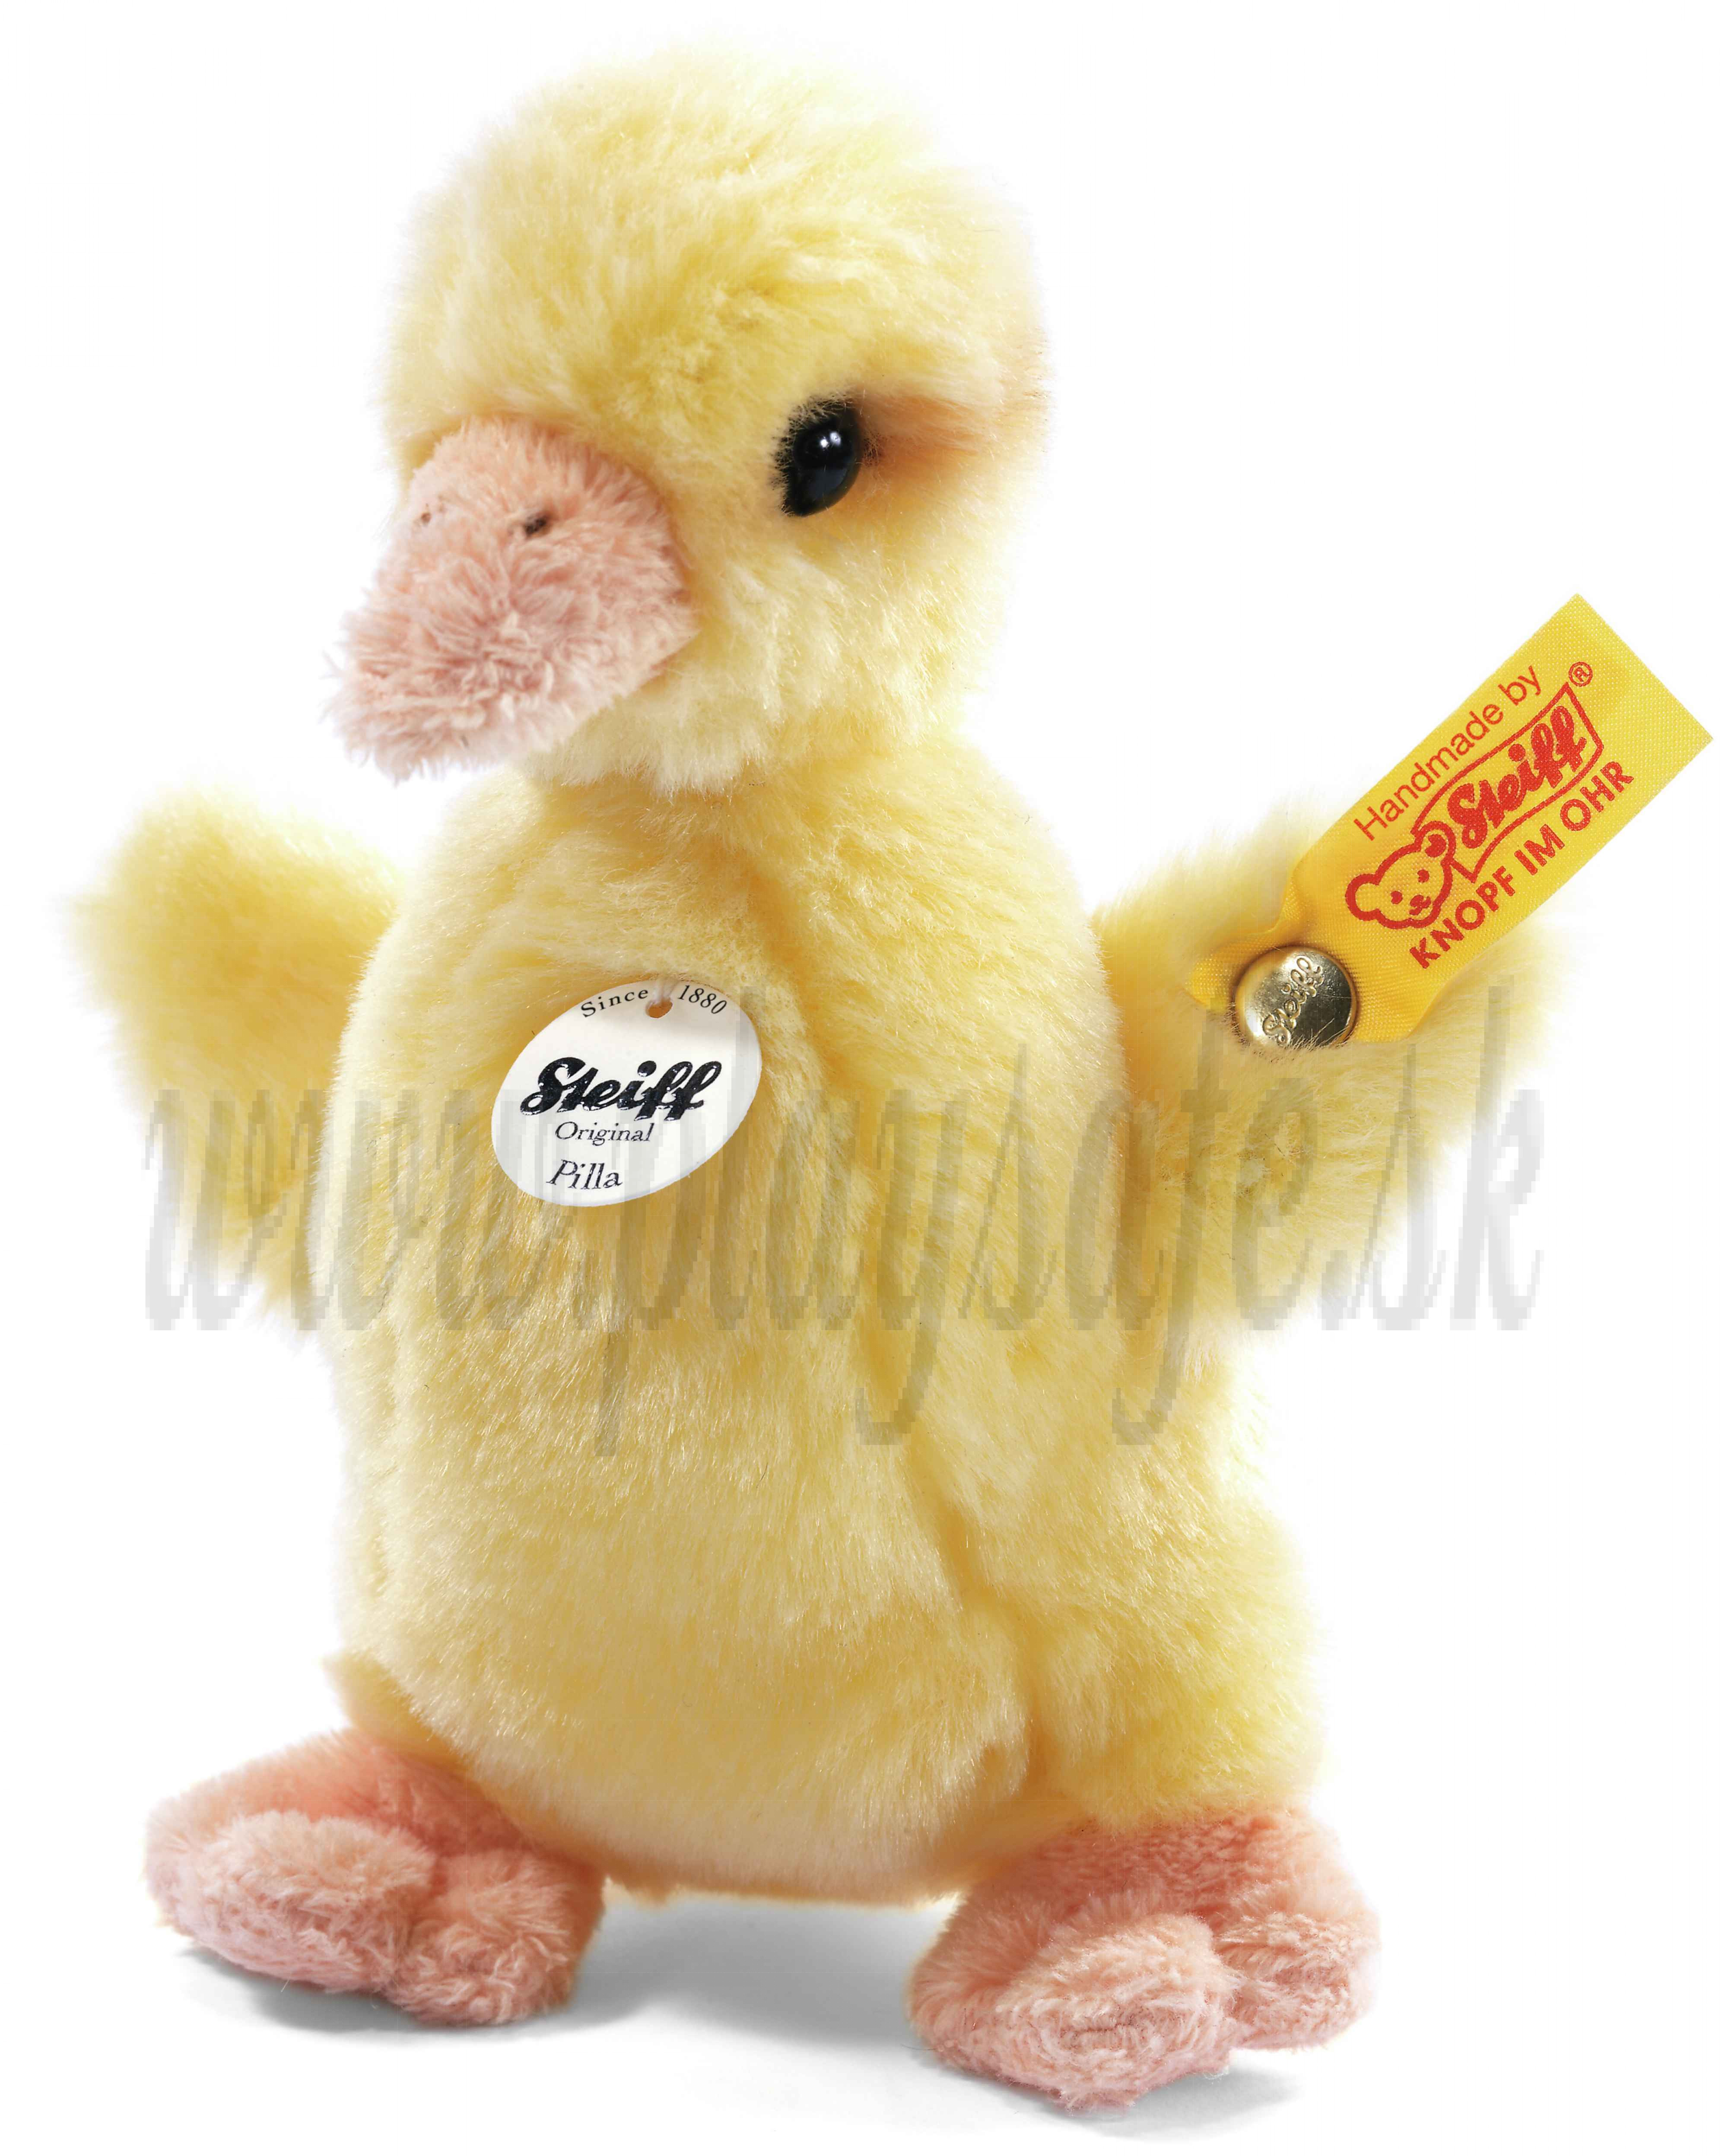 Steiff Soft toy duckling Pilla, 14cm